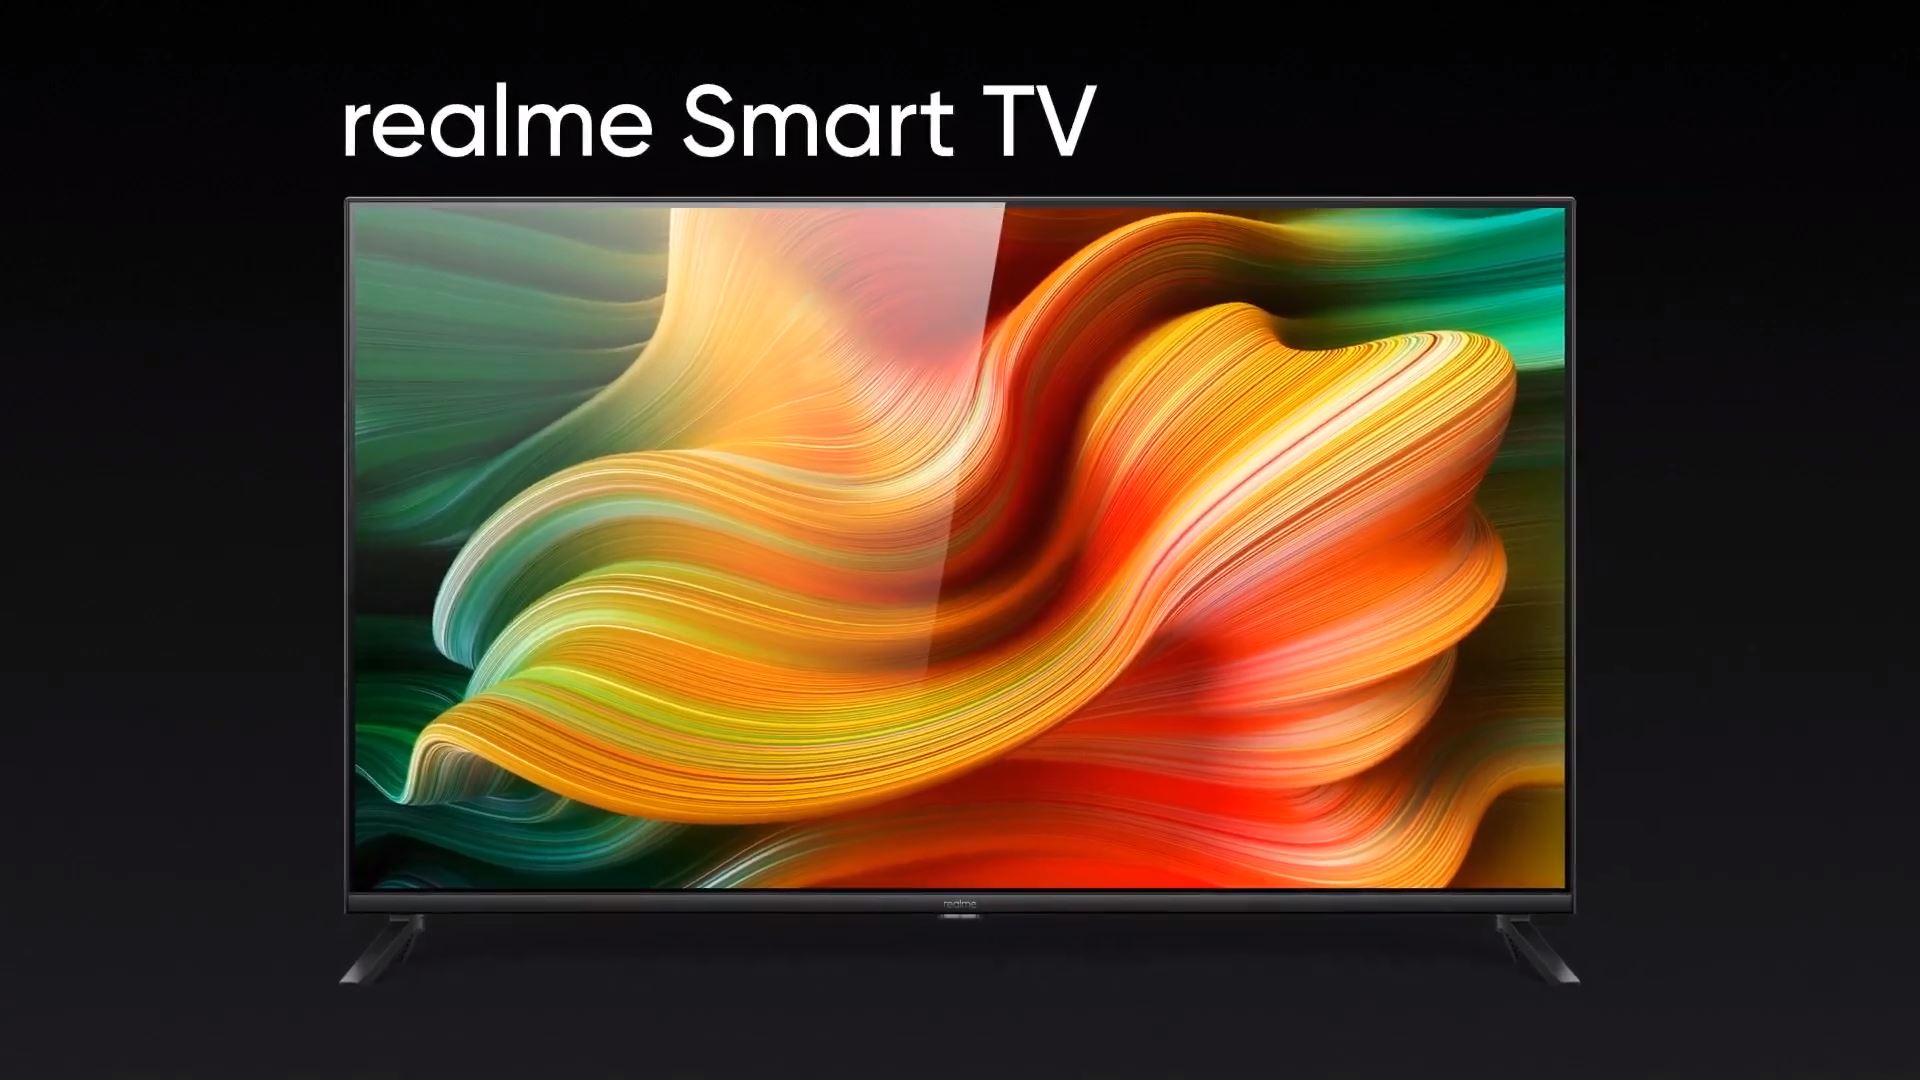 realme smart tv